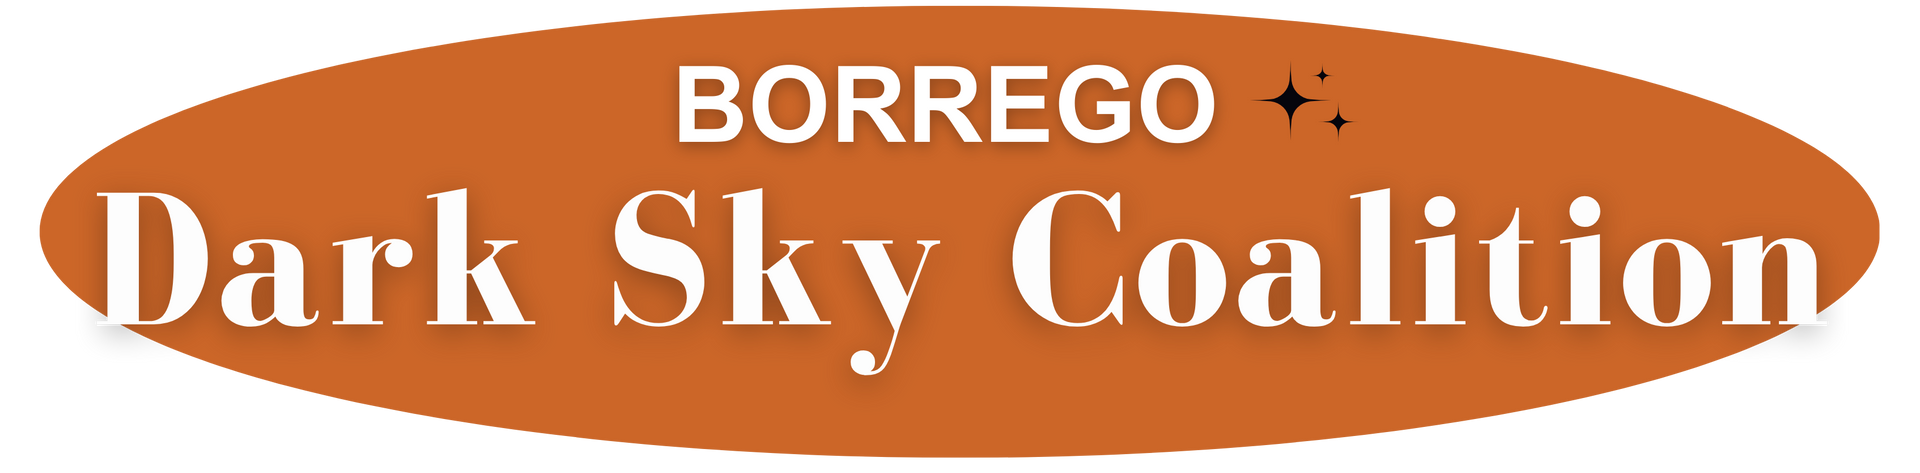 borrego dark sky coalition 